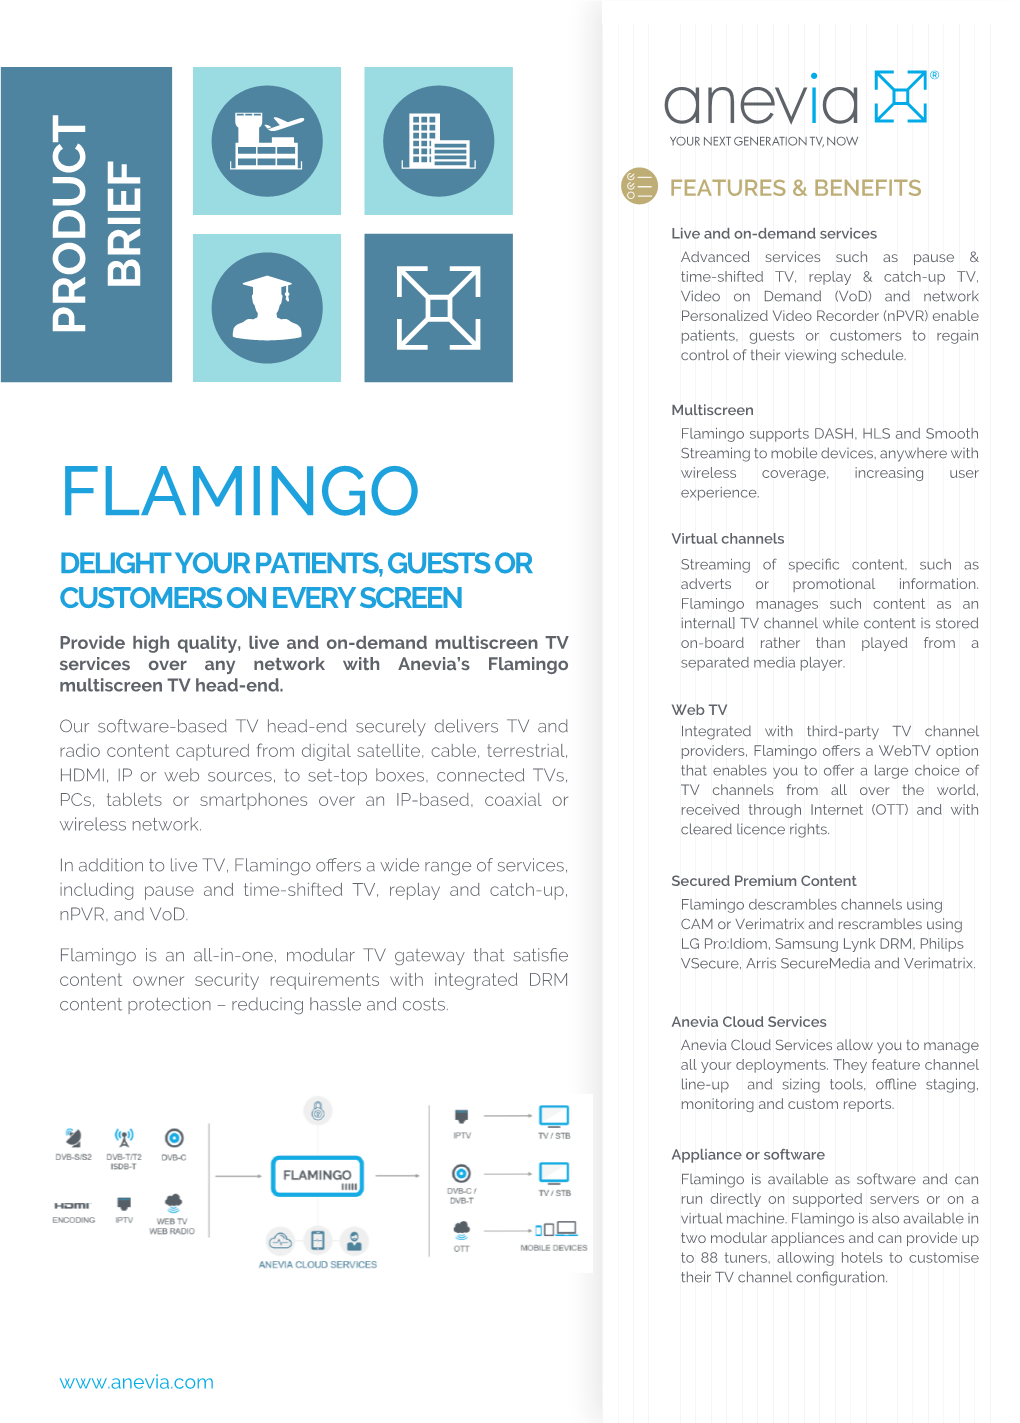 FLAMINGO Content Protection–Reducinghassleandcosts